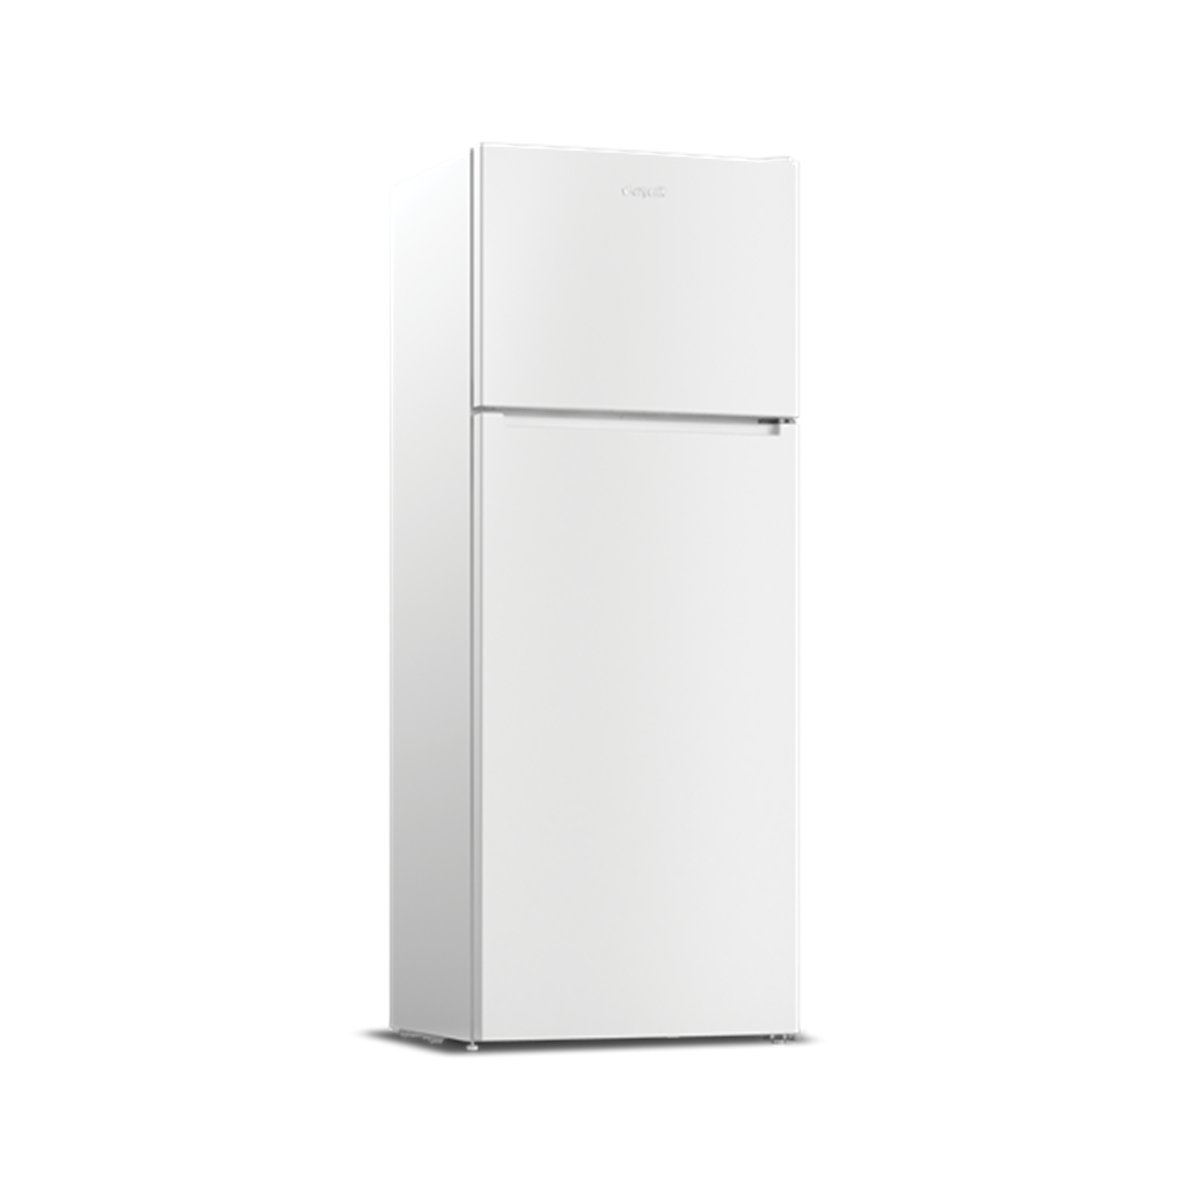 Arçelik 570464 MB No Frost Buzdolabı Fiyatı - Nofrost Buzdolabı Fiyatları